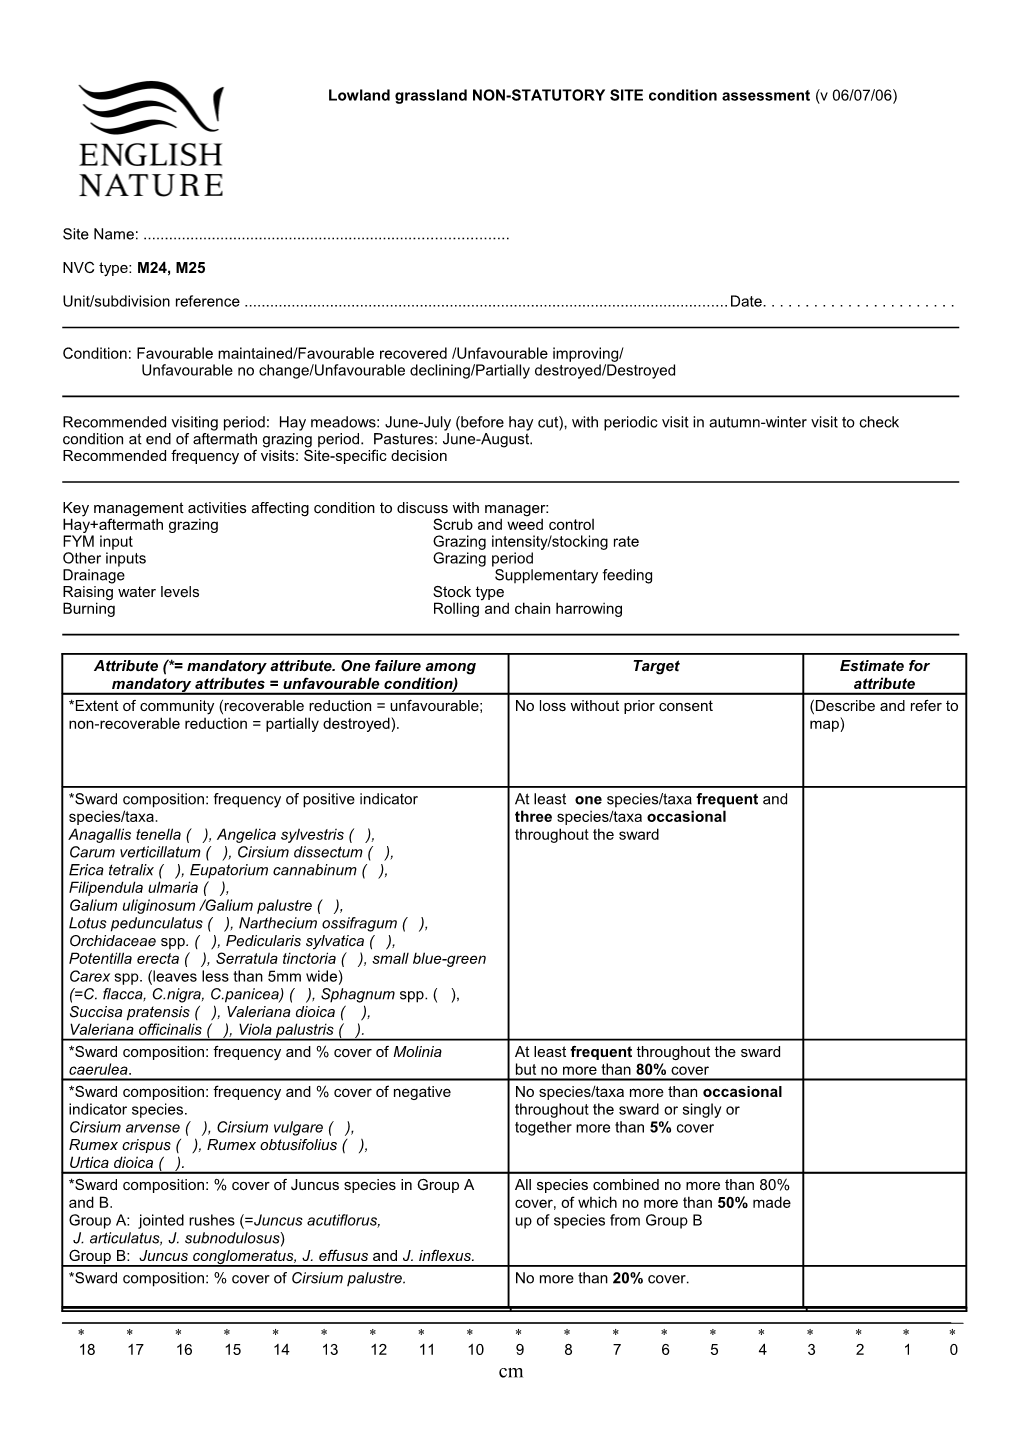 Lowland Grassland NON-STATUTORY SITE Condition Assessment (V 06/07/06)